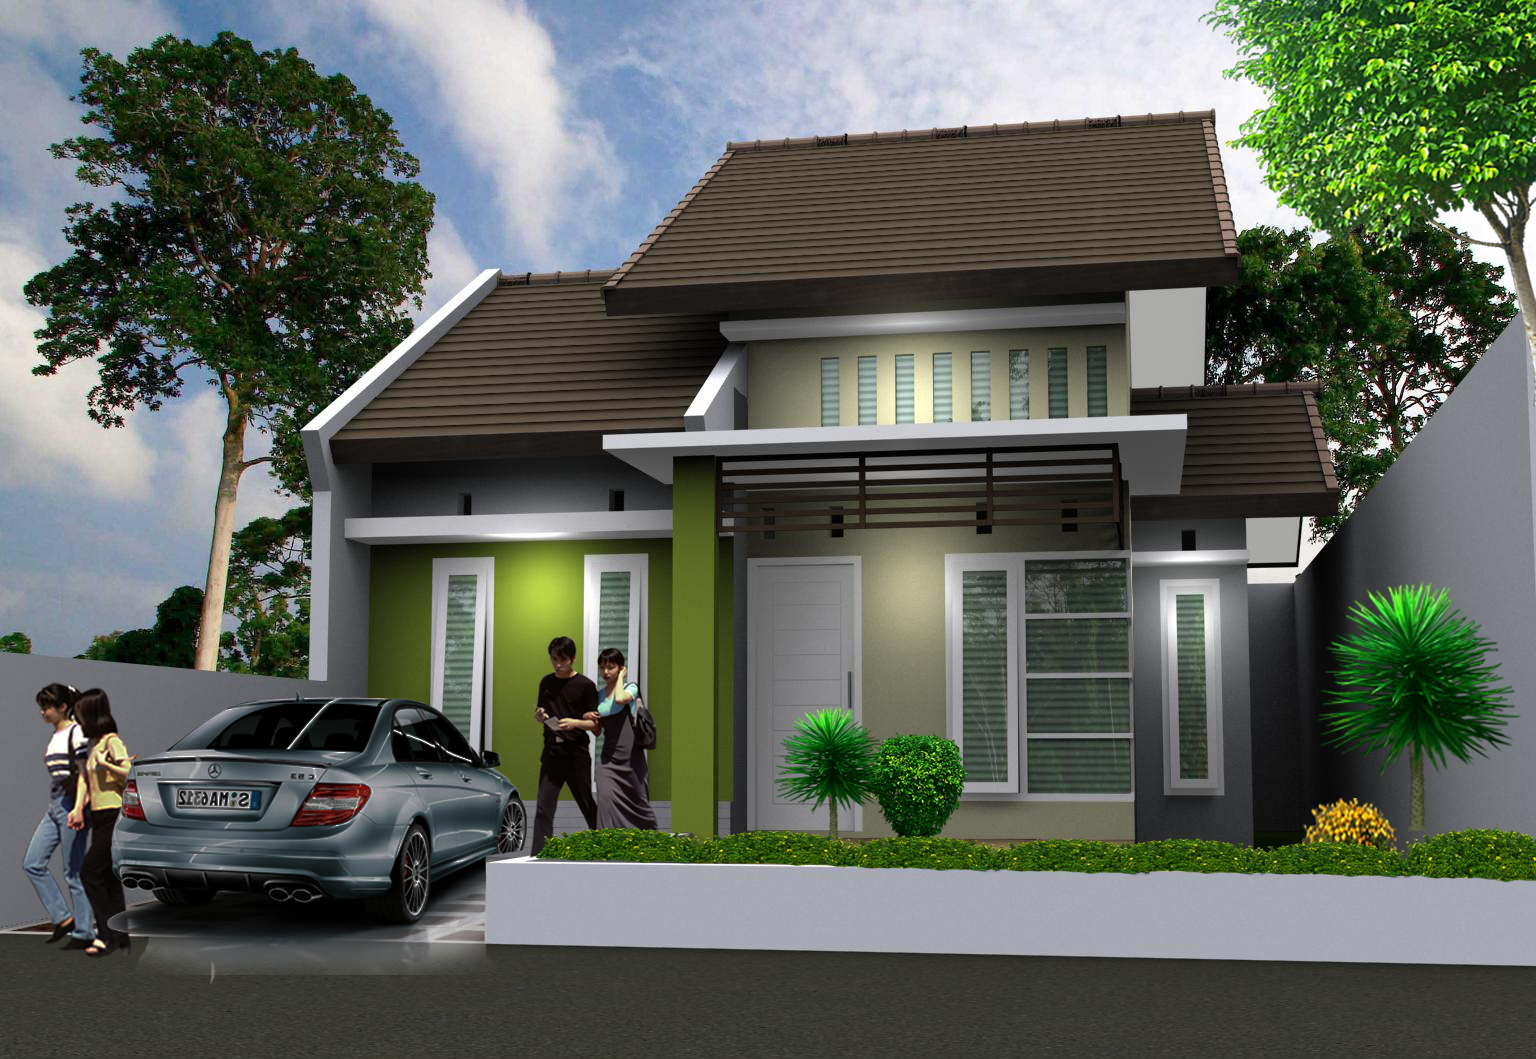 21 Model Rumah  Sederhana  Tapi Kelihatan Mewah Terbaru 2021 